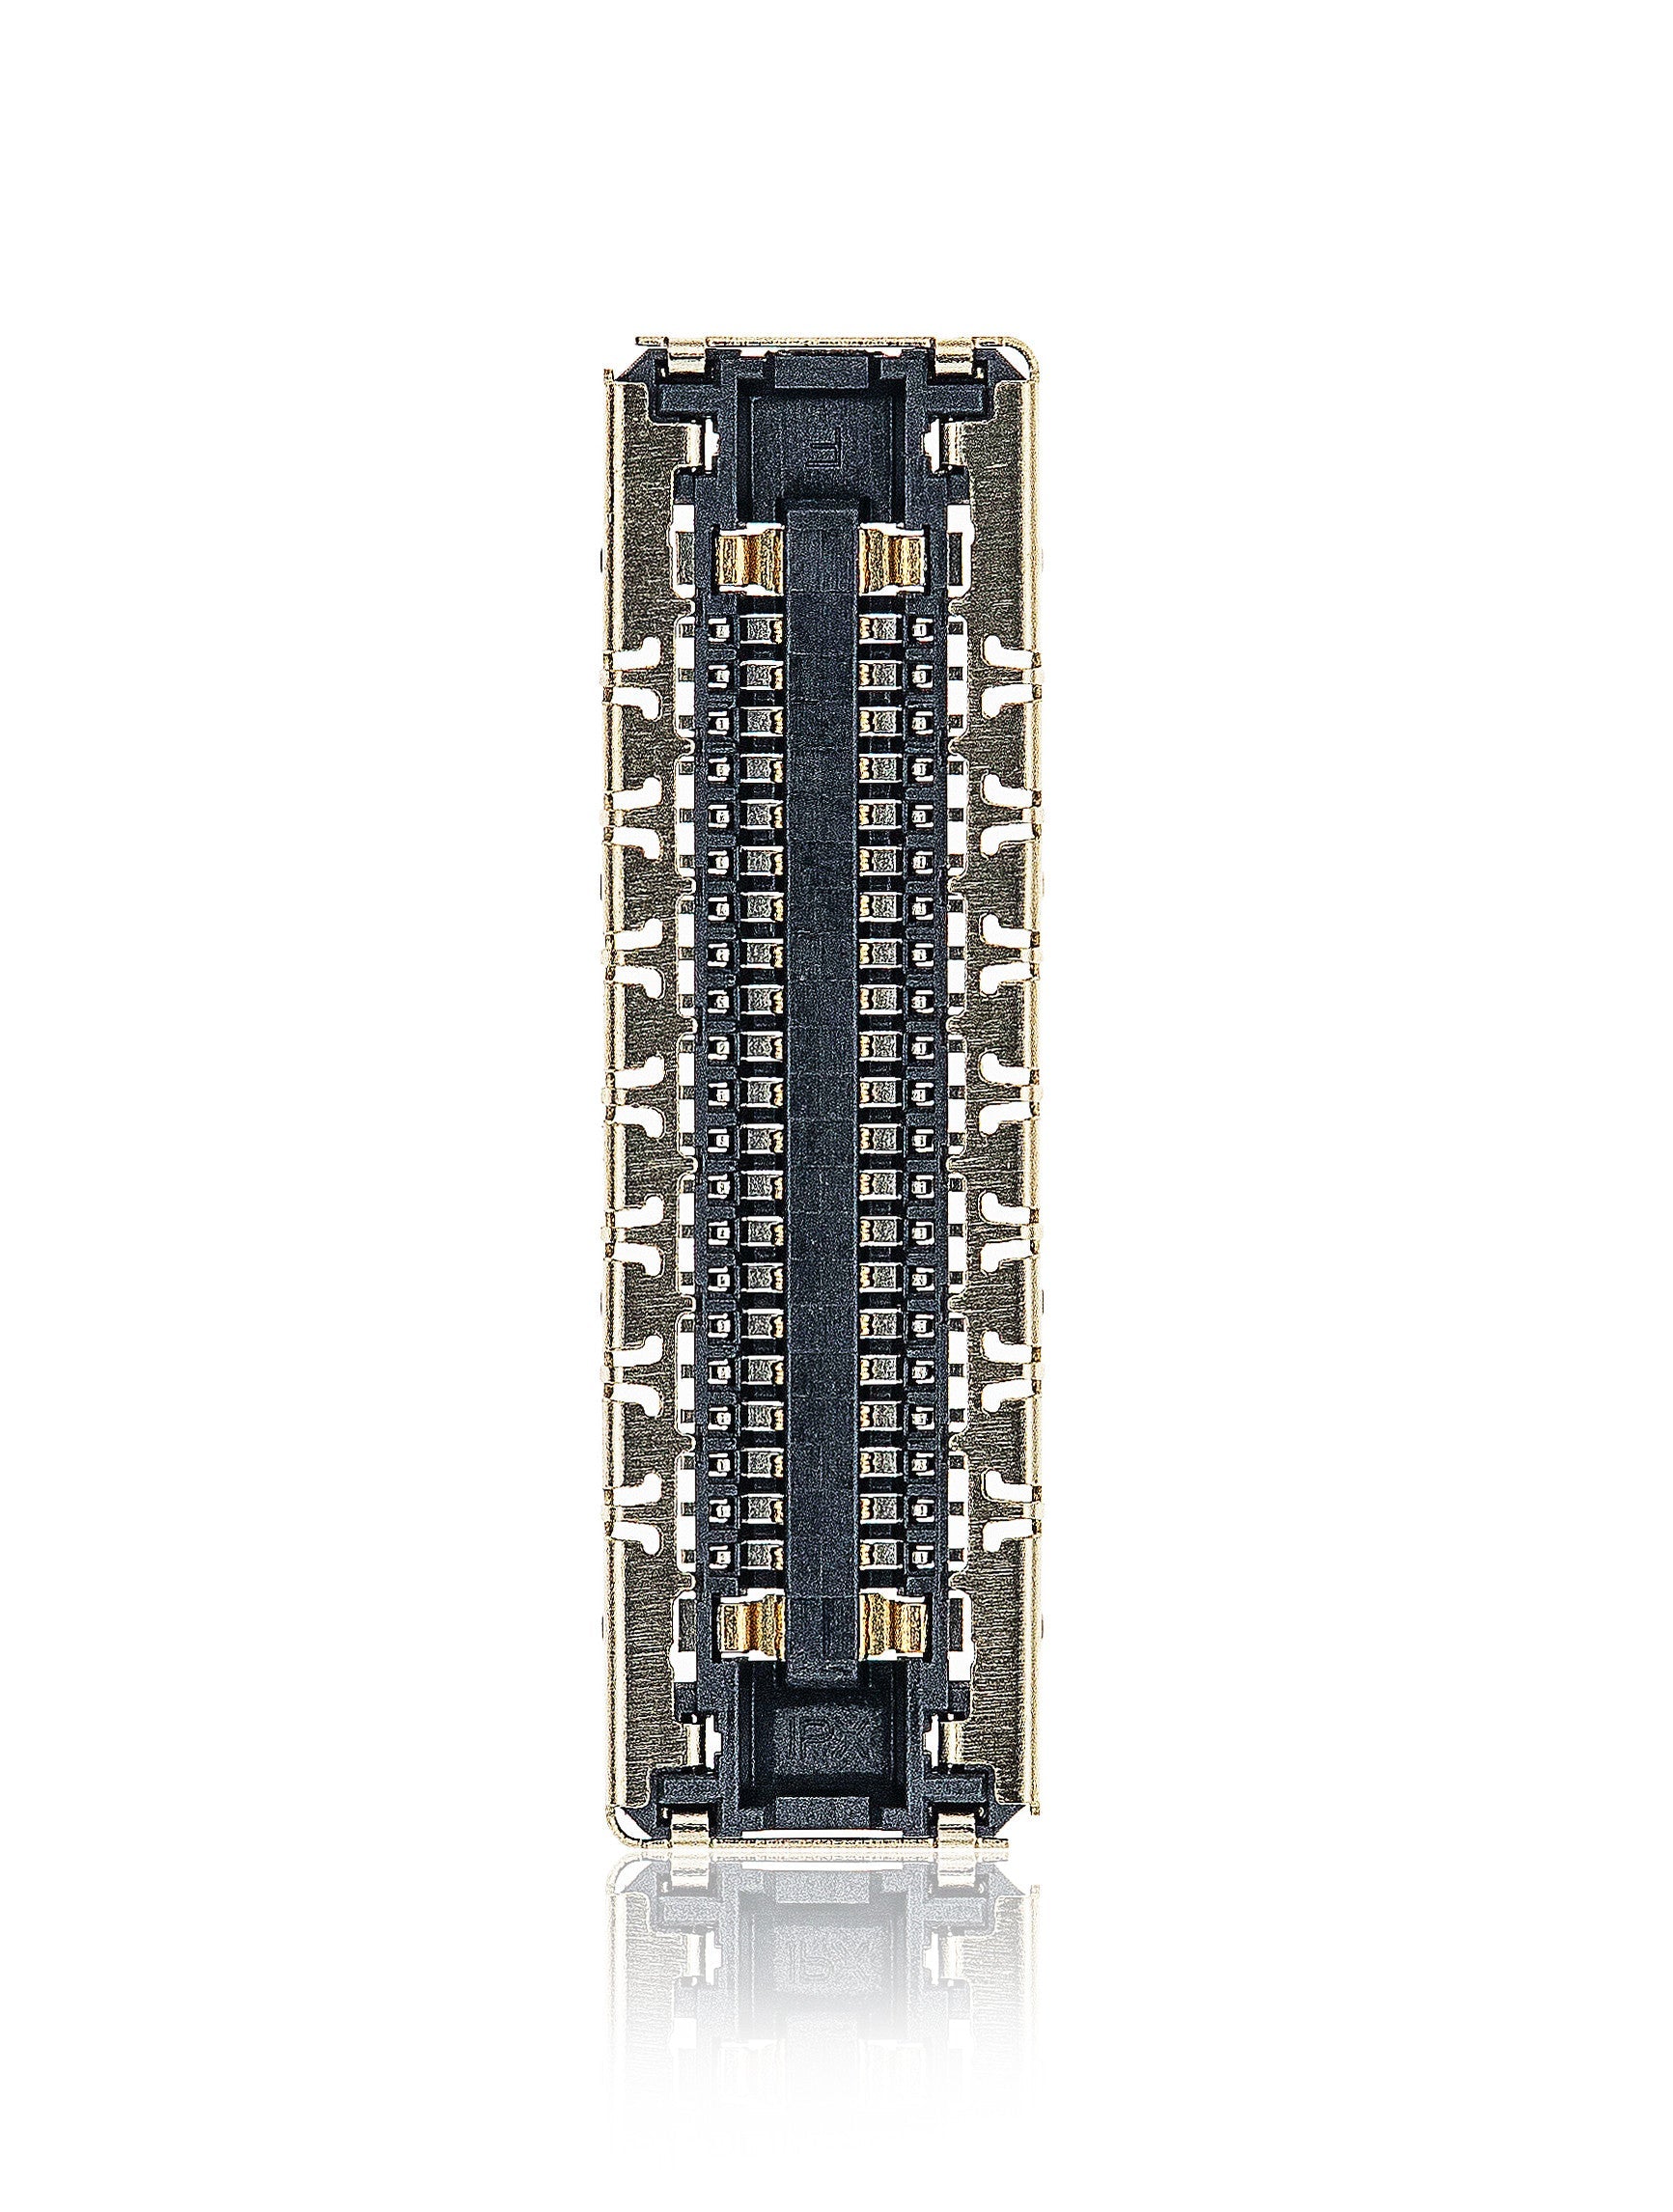 LCD FPC CONNECTOR (42 PIN) FOR MACBOOK PRO RETINA 13" / 15" / AIR 13" (A1706 / A1707 / A1708 / A1989 / A2159 / A2251 / A2289 / A1990 / A1932 / A2179)